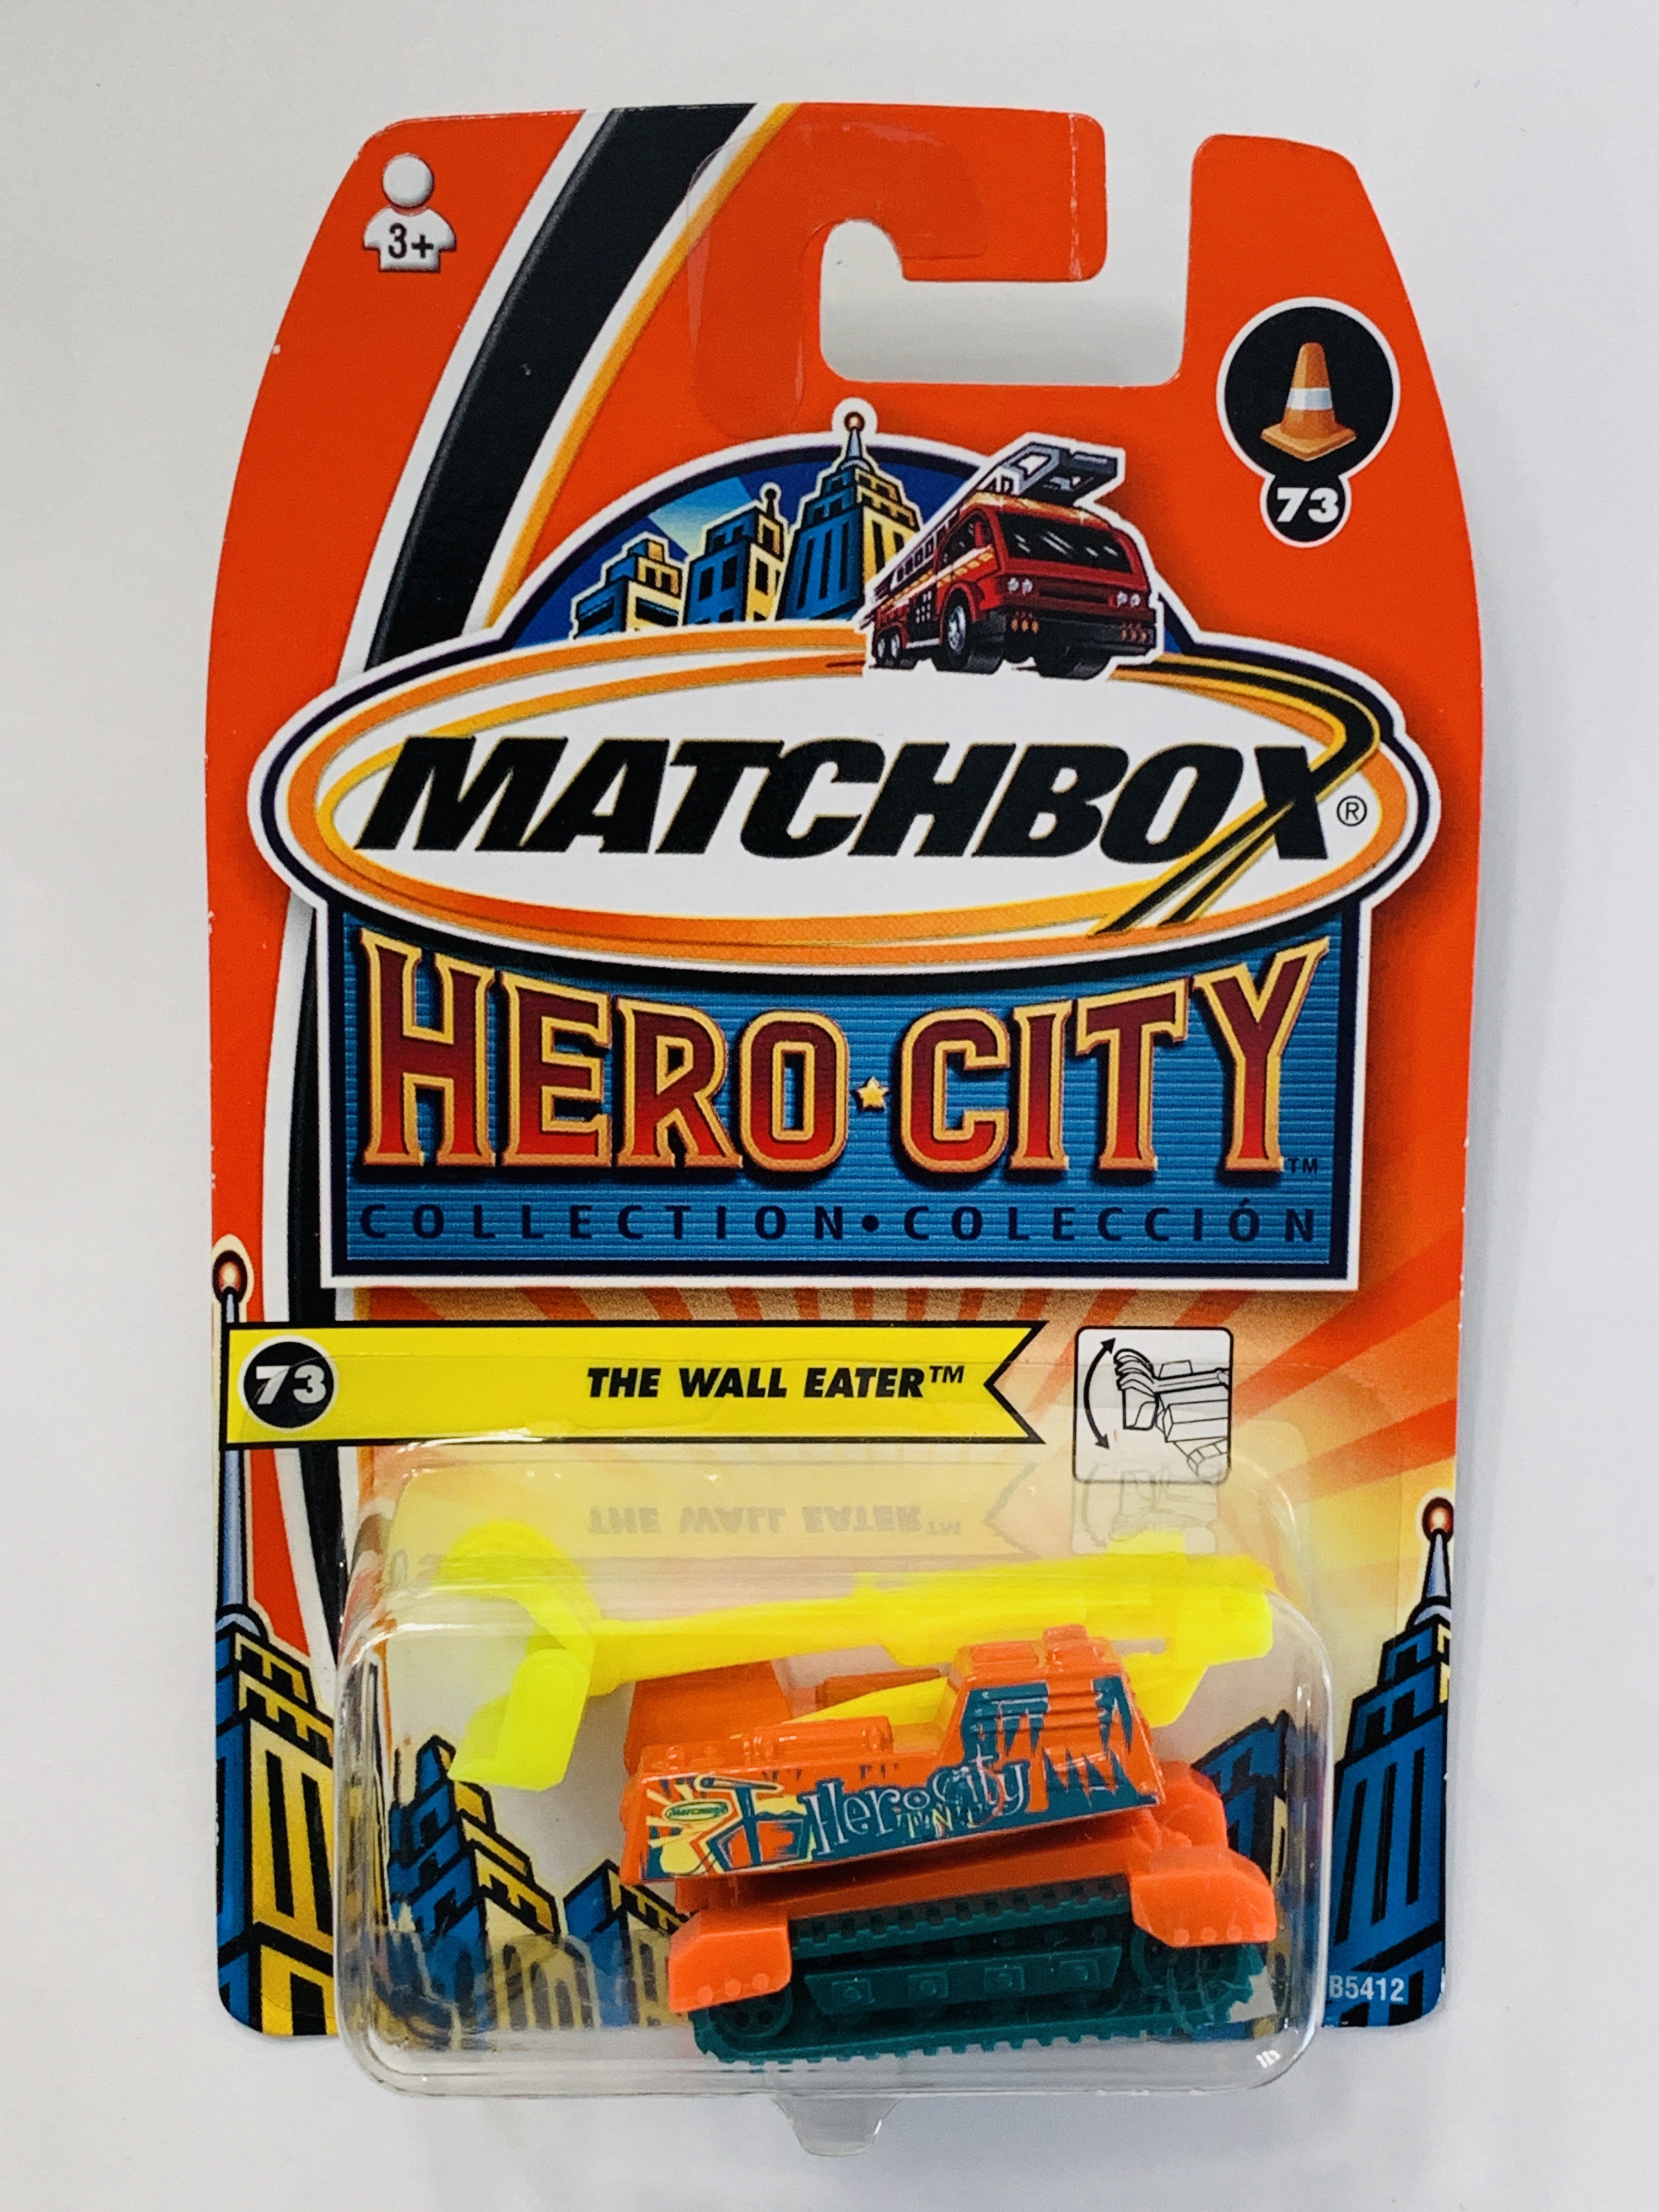 Matchbox #73 Hero City The Wall Eater